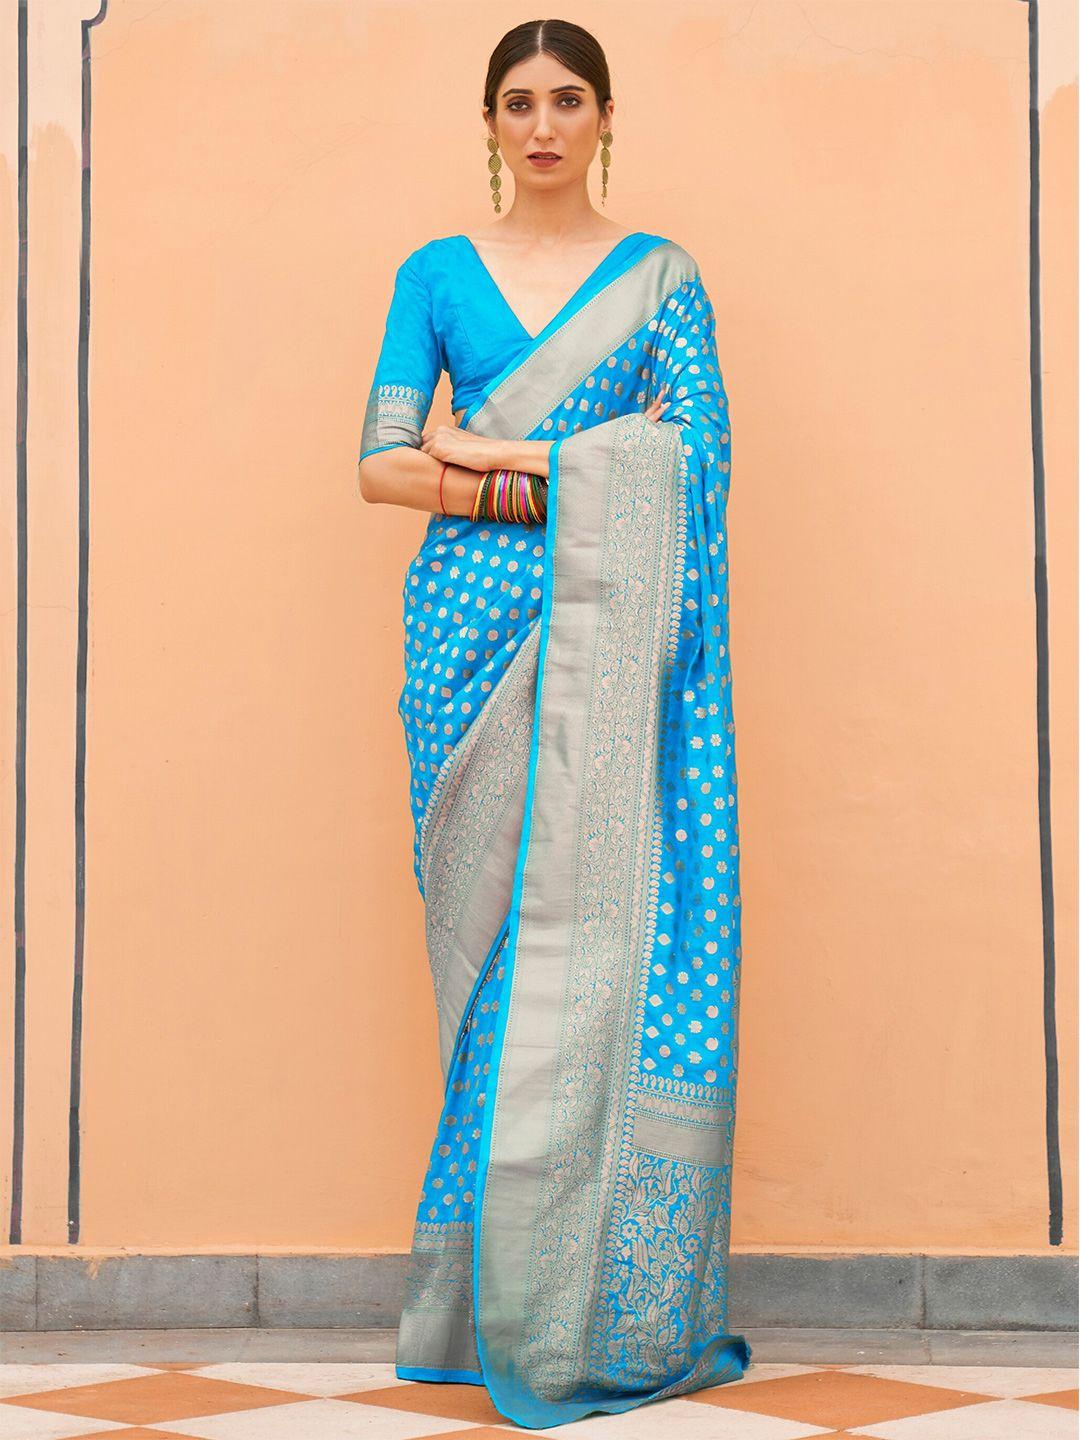 mitera turquoise blue & gold-toned zari banarasi saree